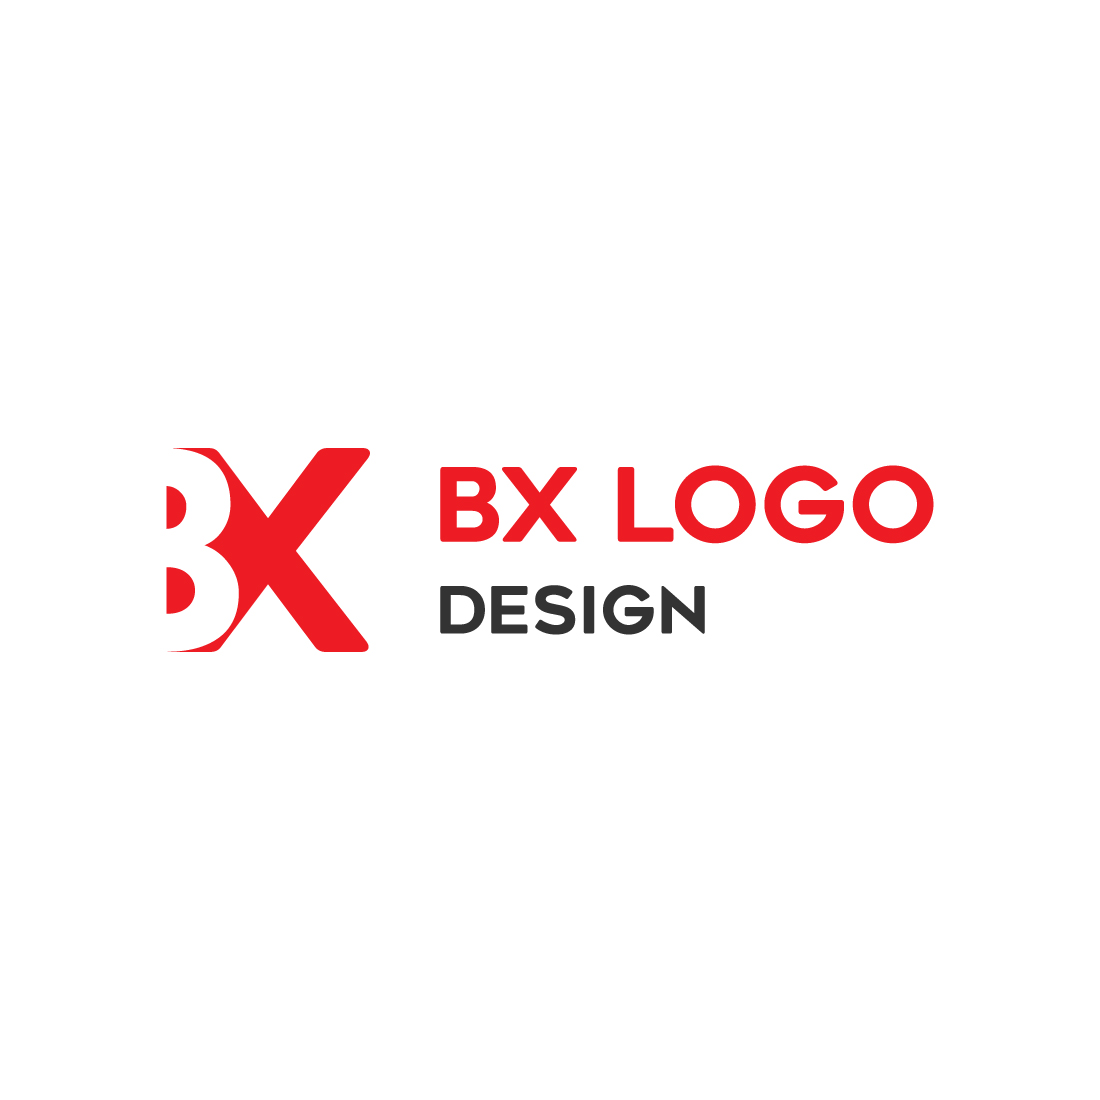 BX logo preview image.